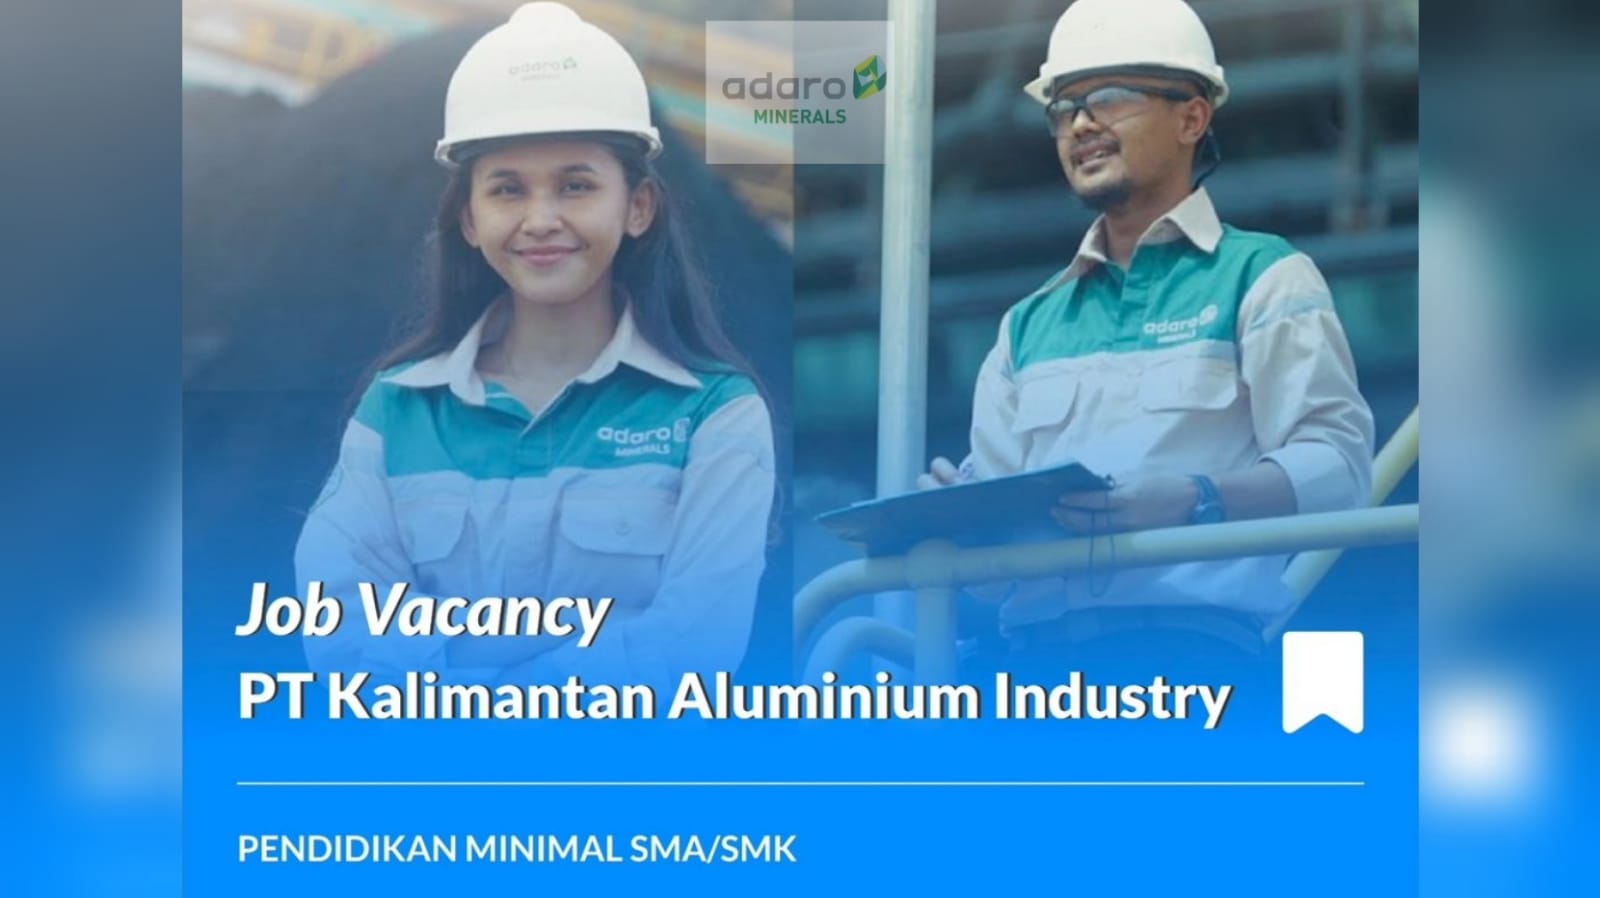 Lowongan Kerja Terbaru PT Kalimantan Aluminium Industry (Adaro Minerals) Minimal SMA/SMK Ini Kualifikasinya